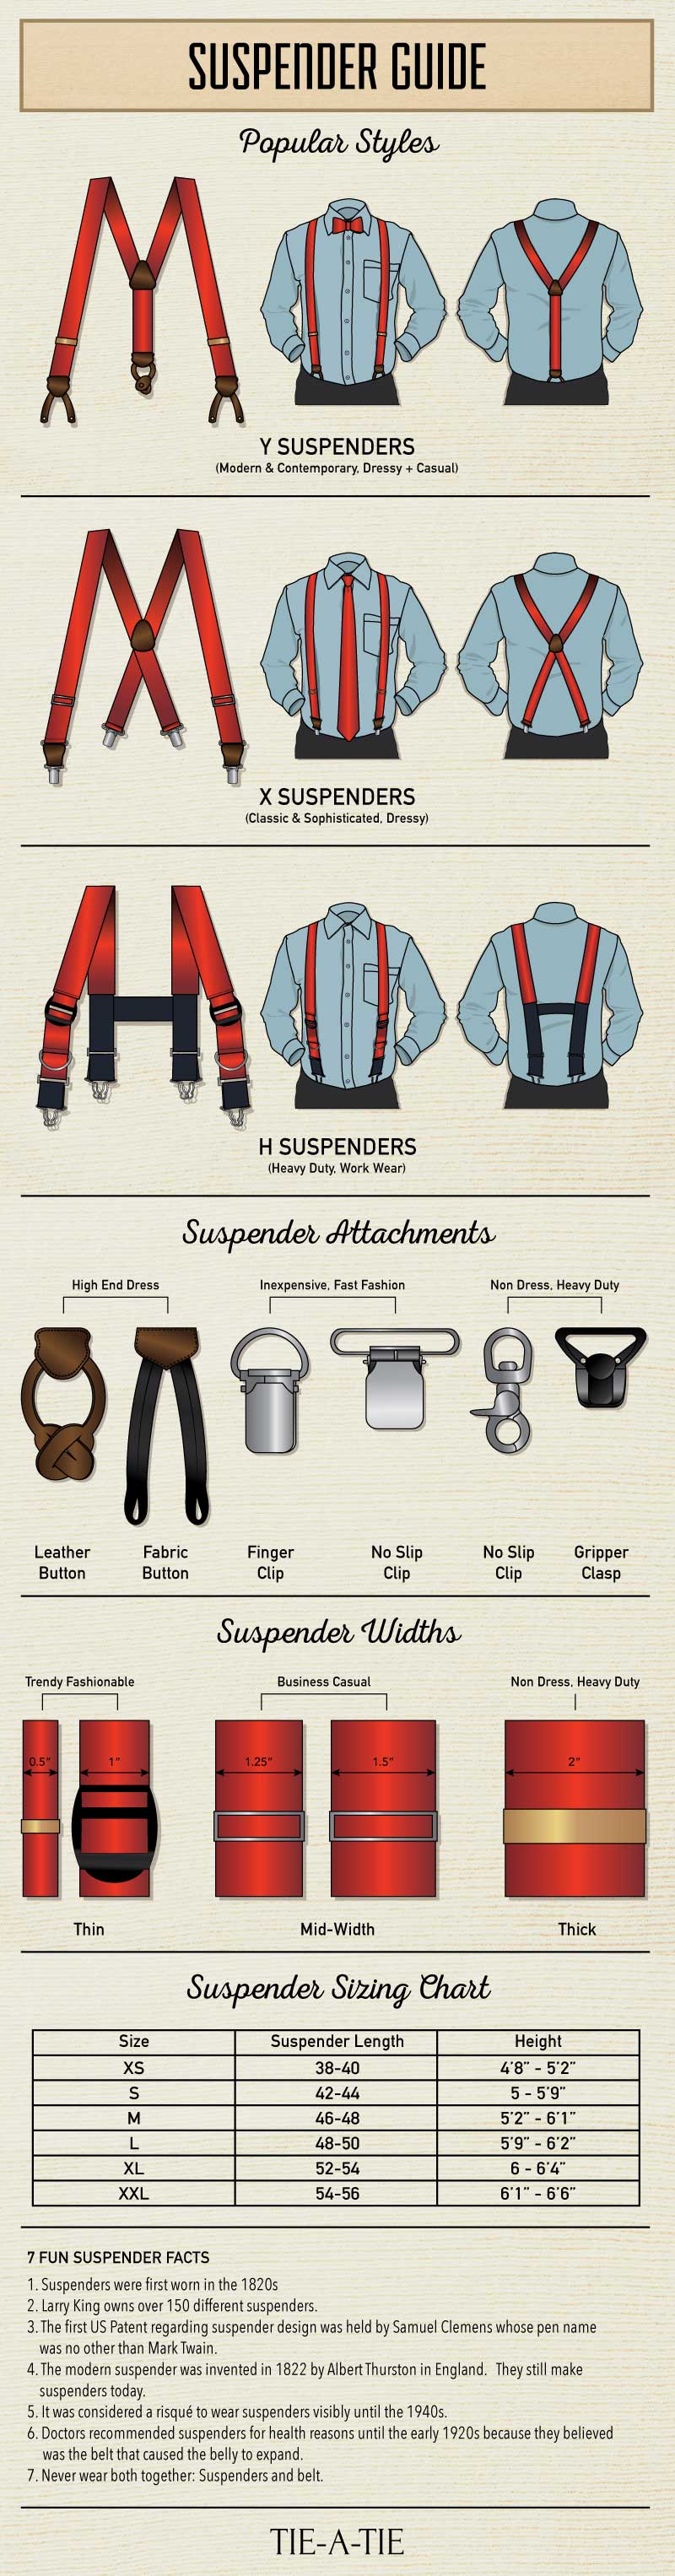 Suspender Guide, How to Wear Suspenders